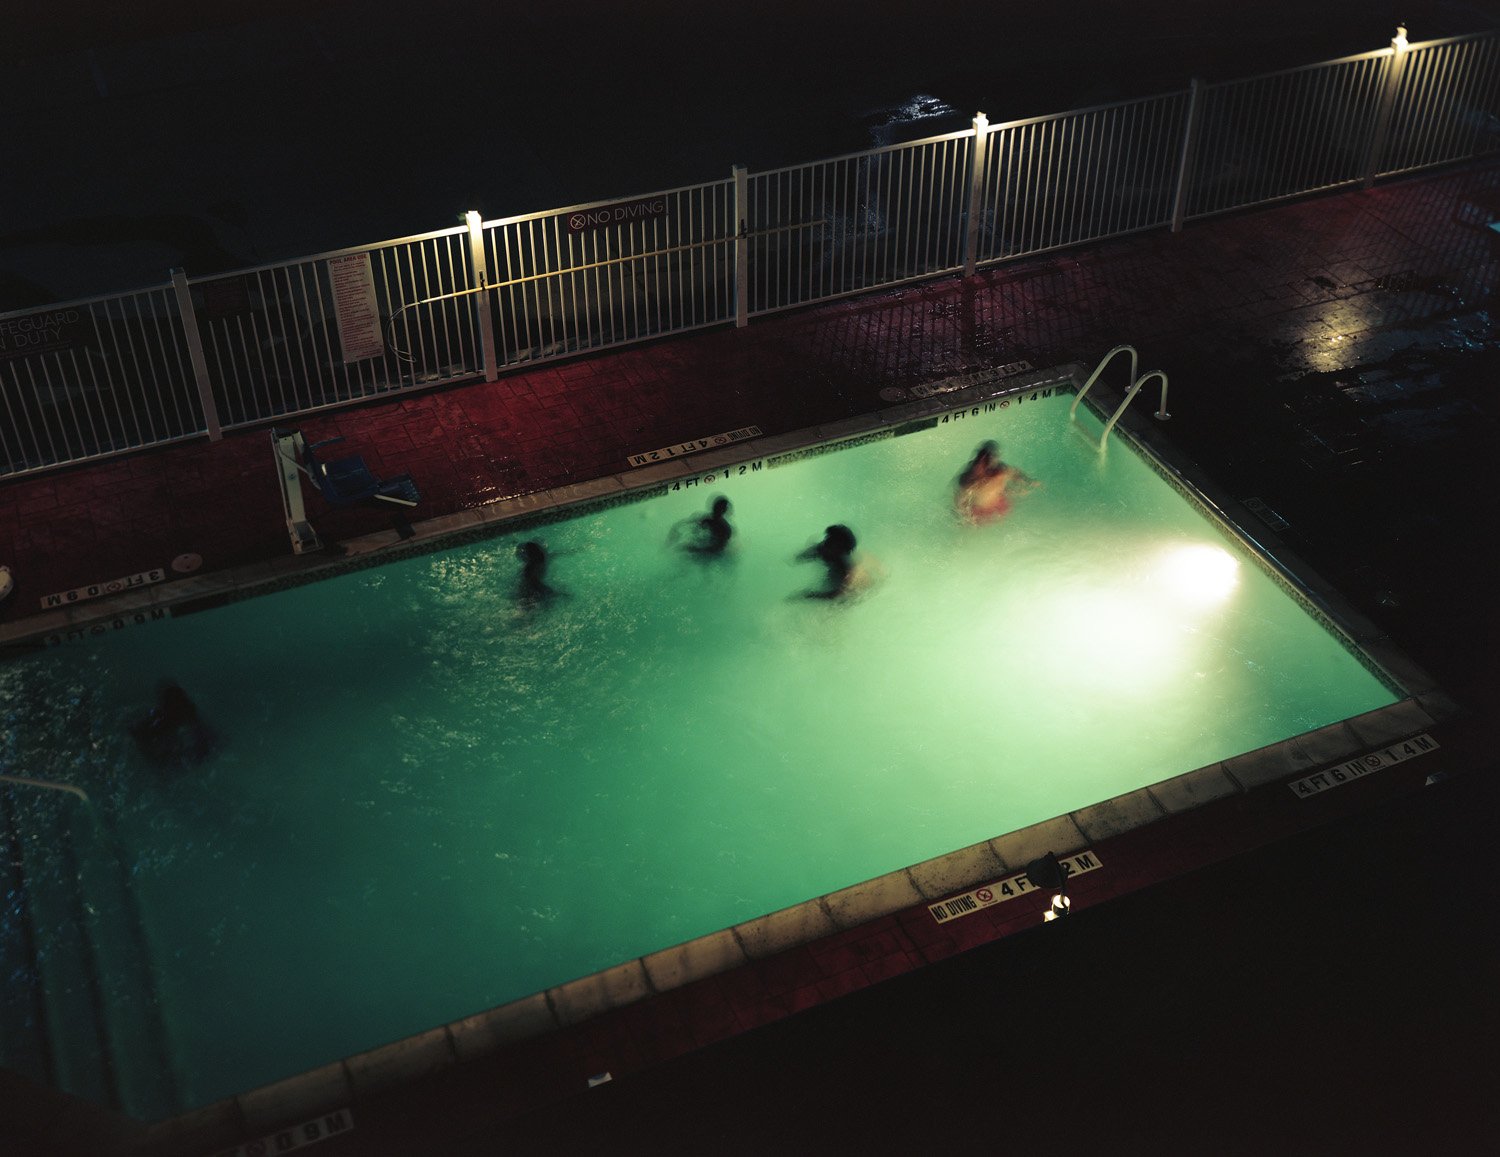 Teenagers playing in pool, Houston, Texas